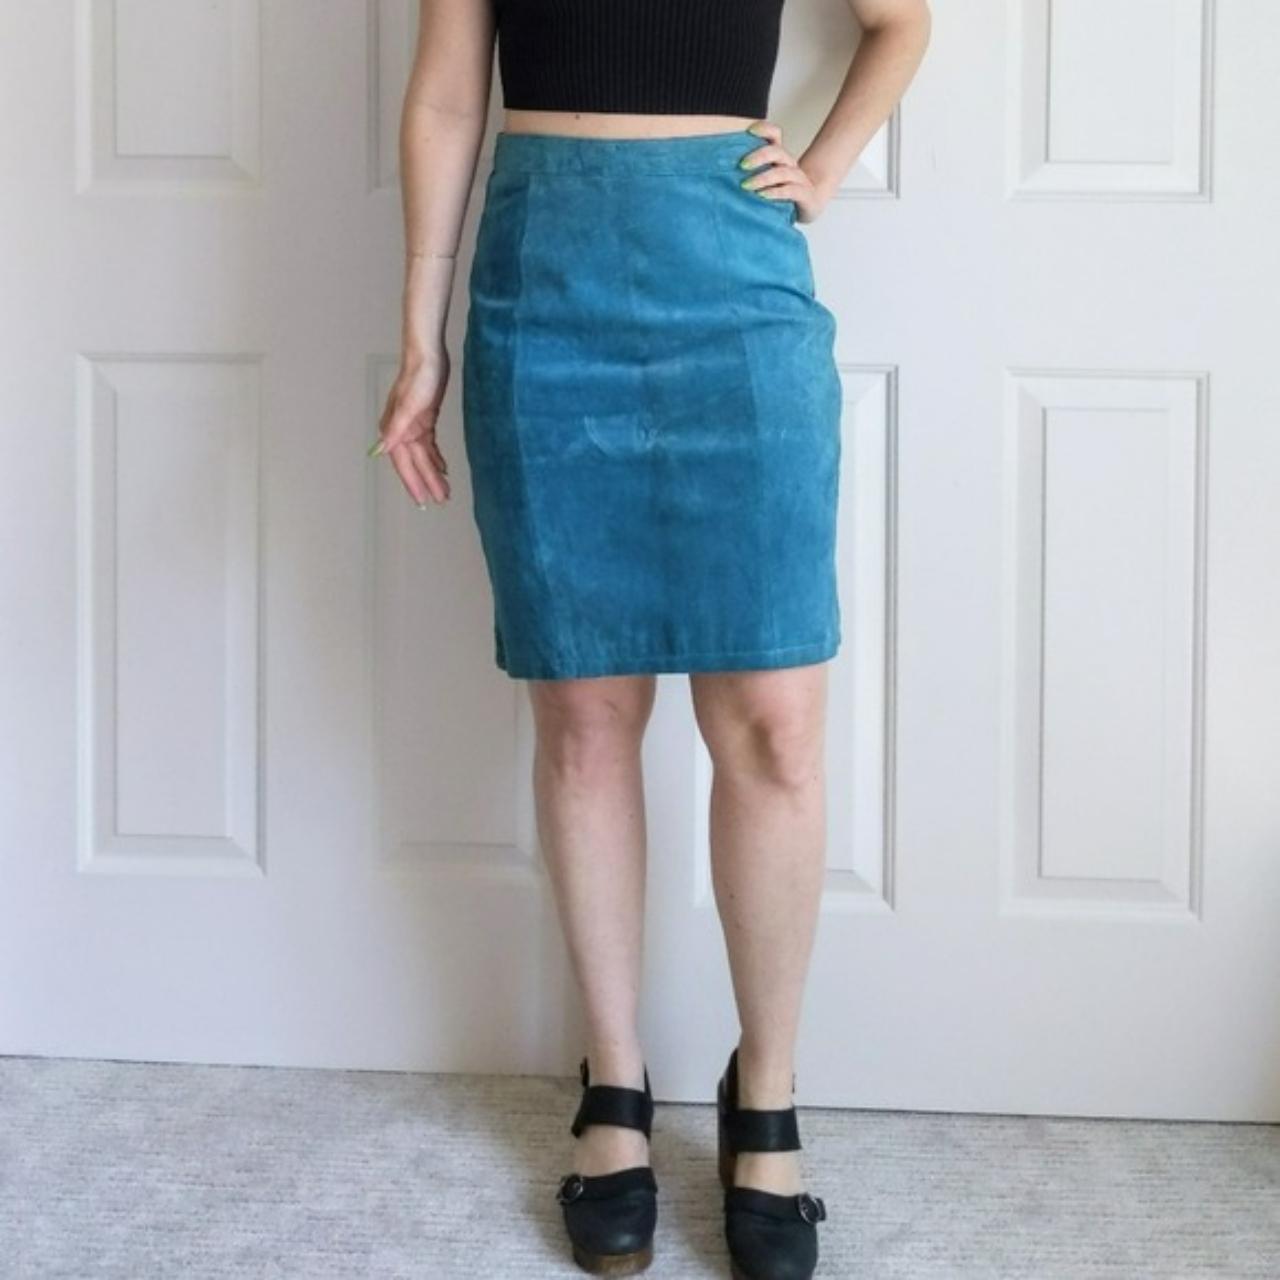 Cute short high waisted pencil mini skirt in a... - Depop